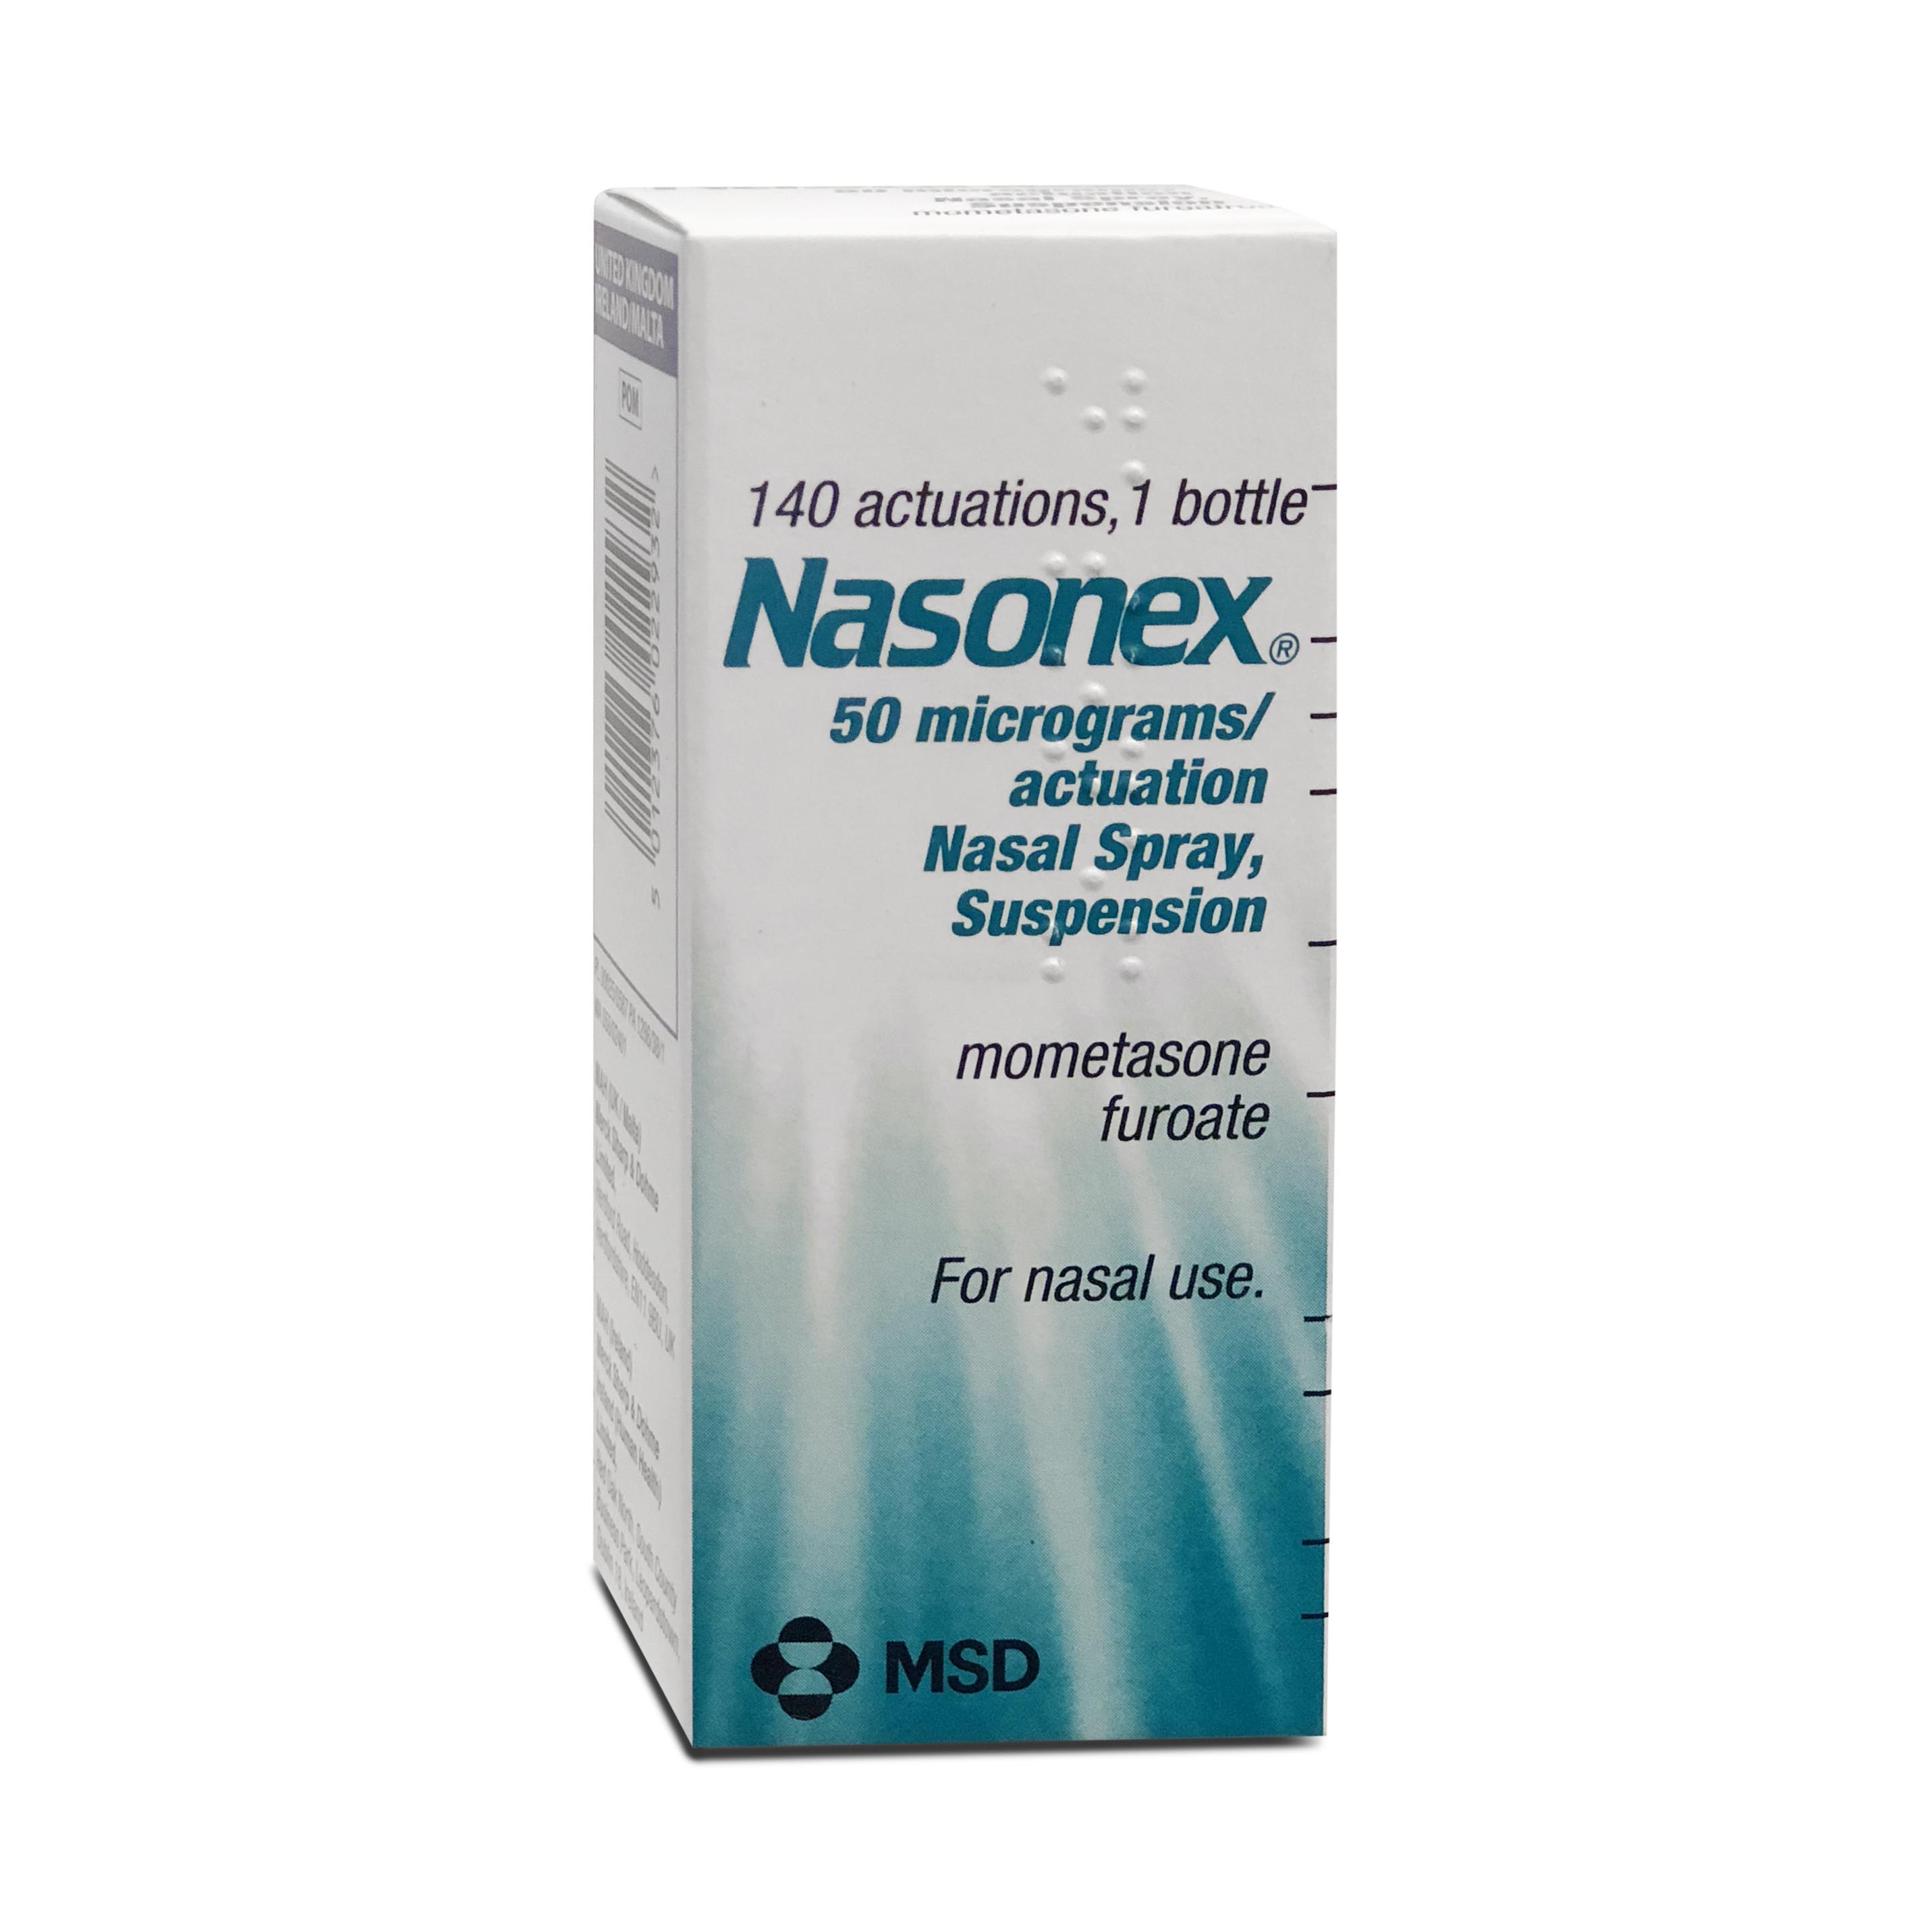 Nasonex Nasal Spray manufactured by MSD